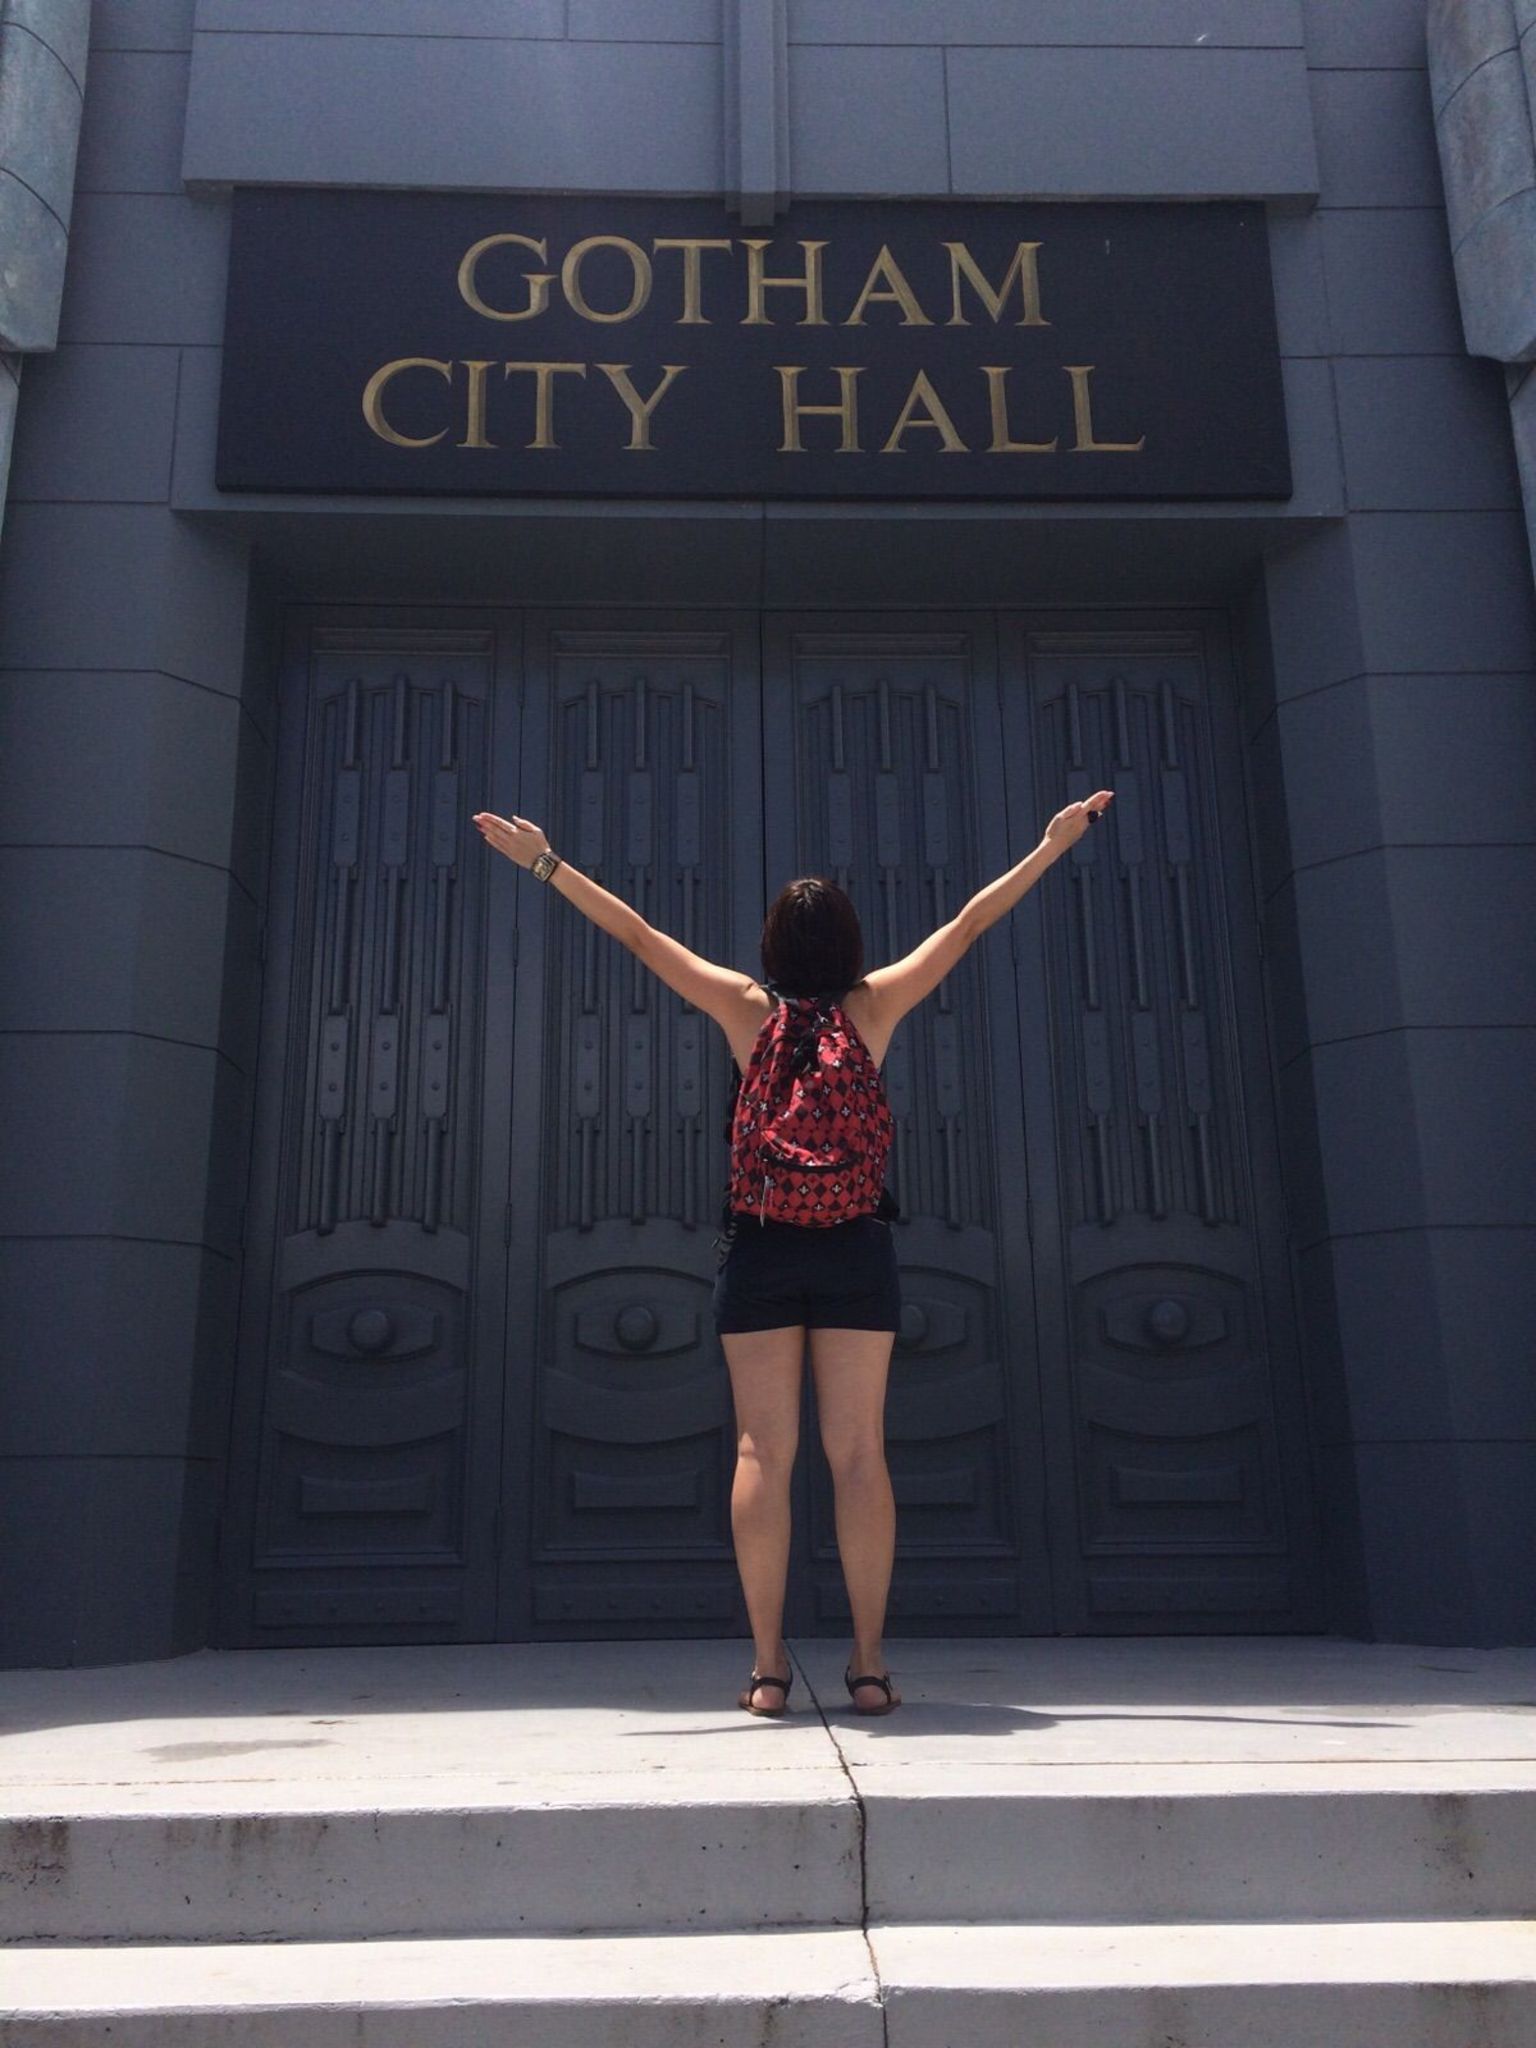 Gotham City Hall